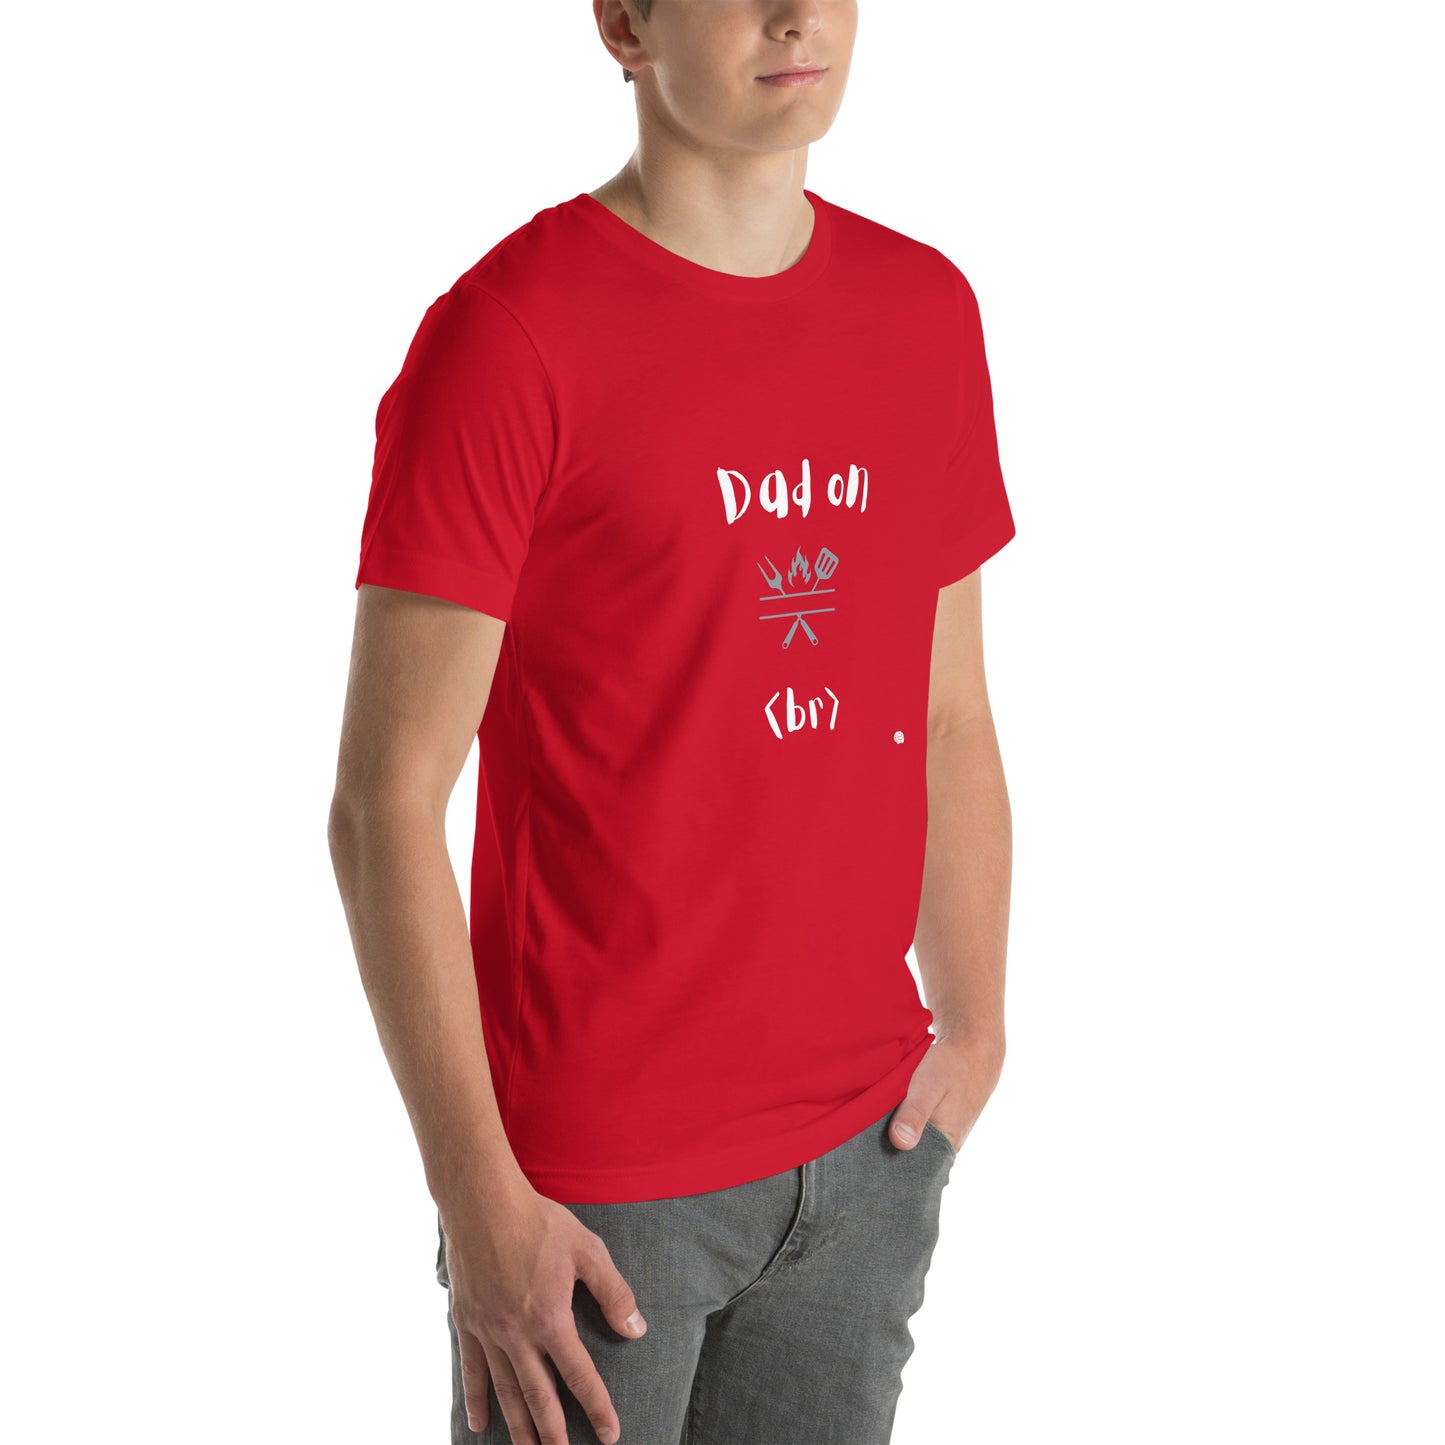 Coding - Dad on <br> (Men's T-shirt)